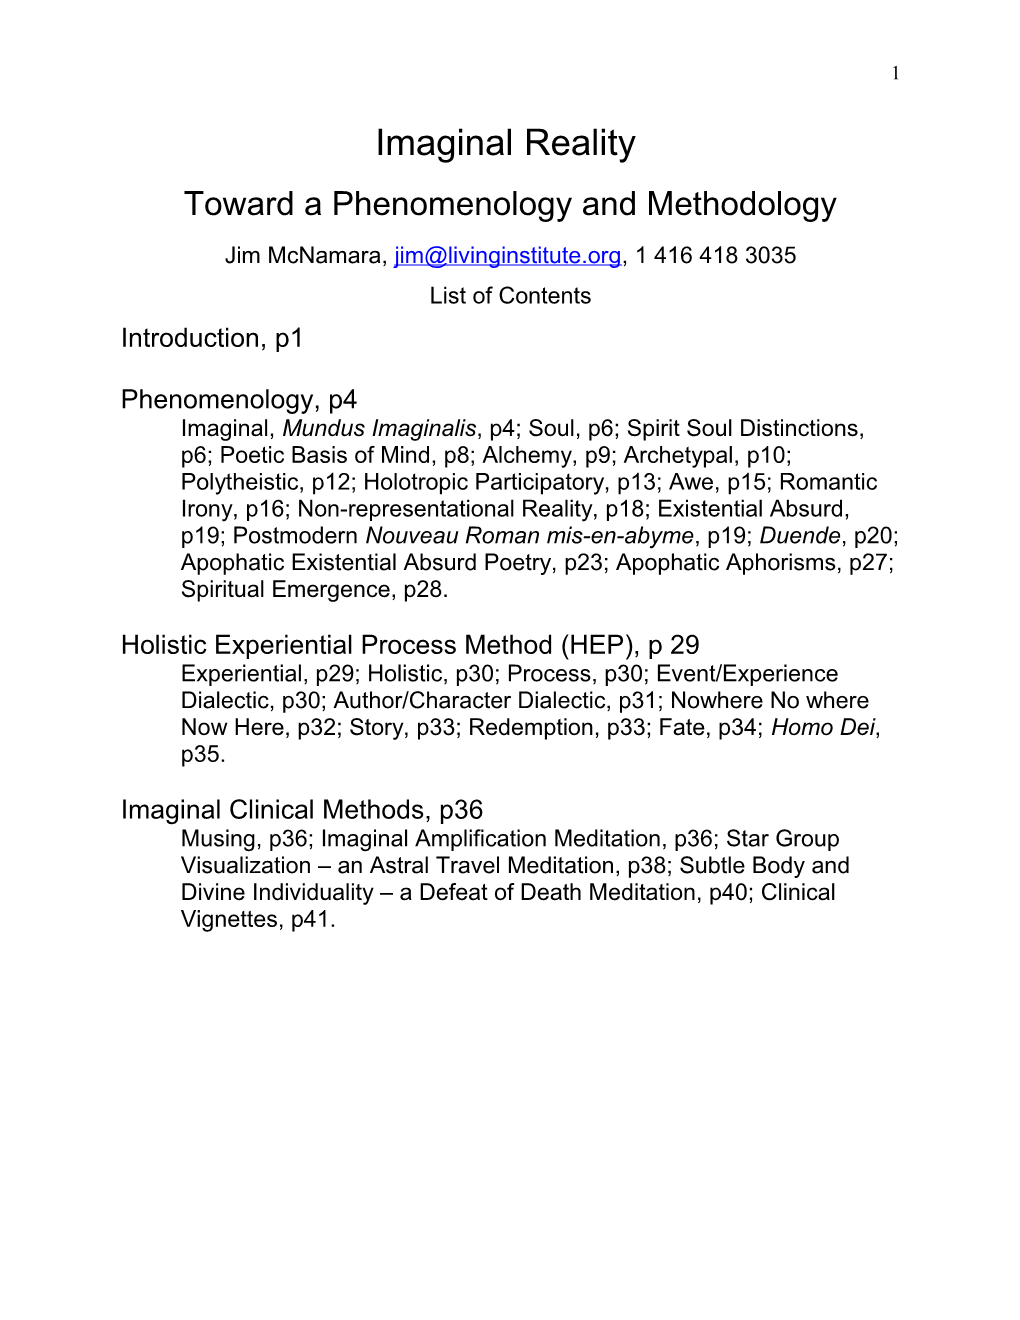 Toward a Phenomenology and Methodology